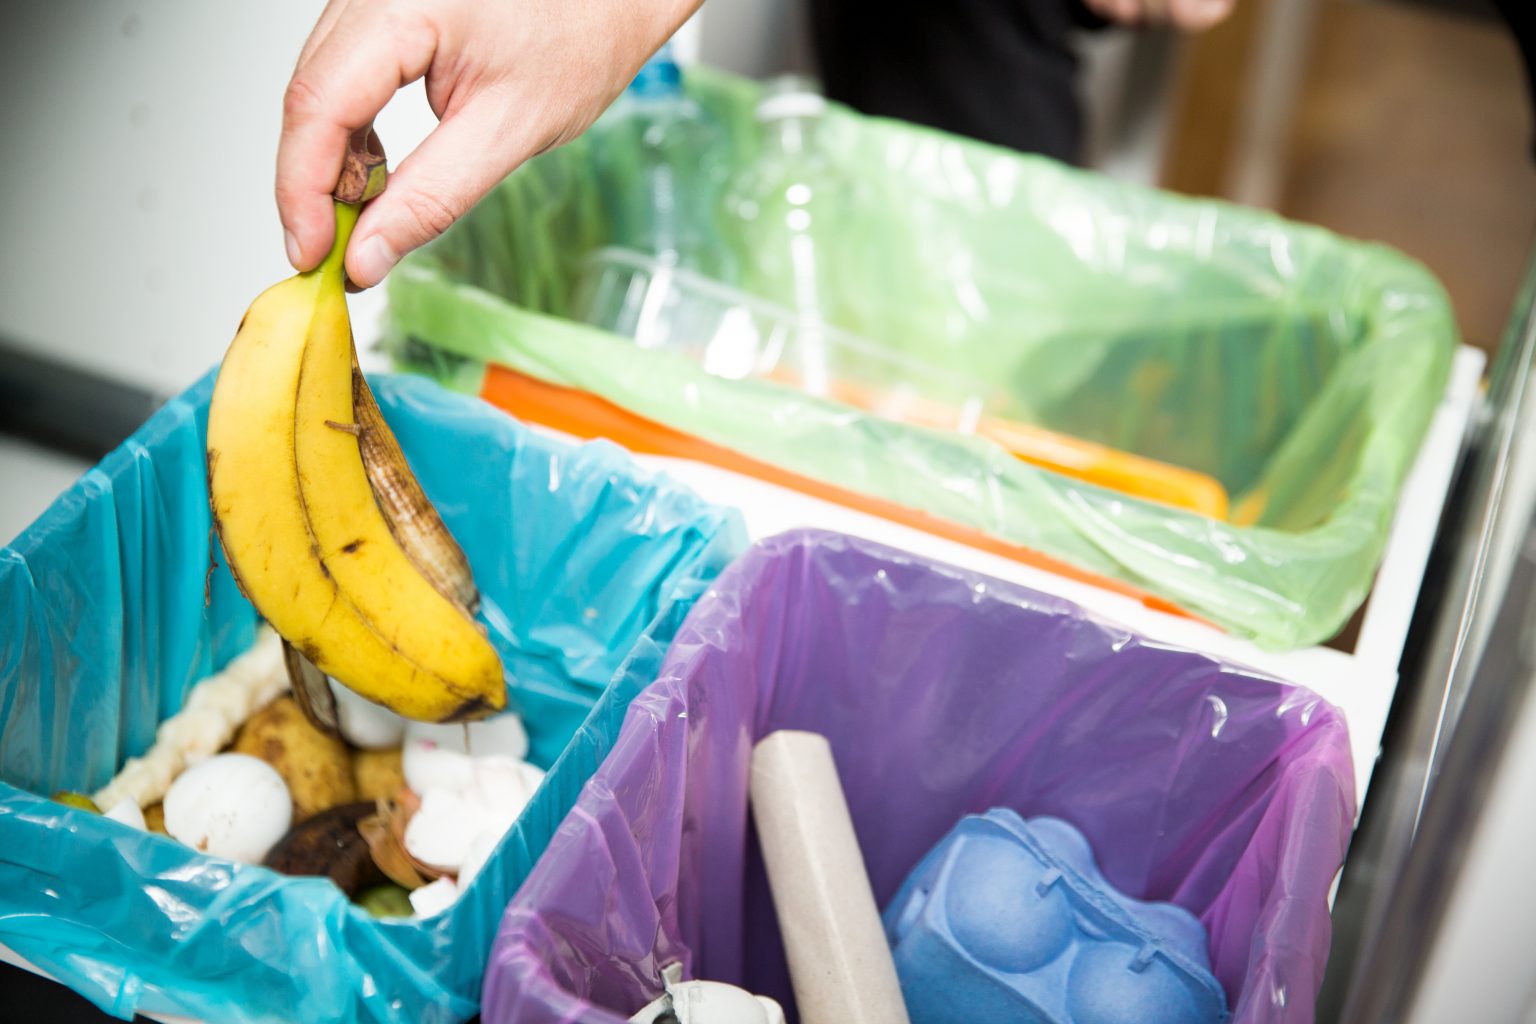 Woman putting banana peel in recycling bio bin in the kitchen. Person